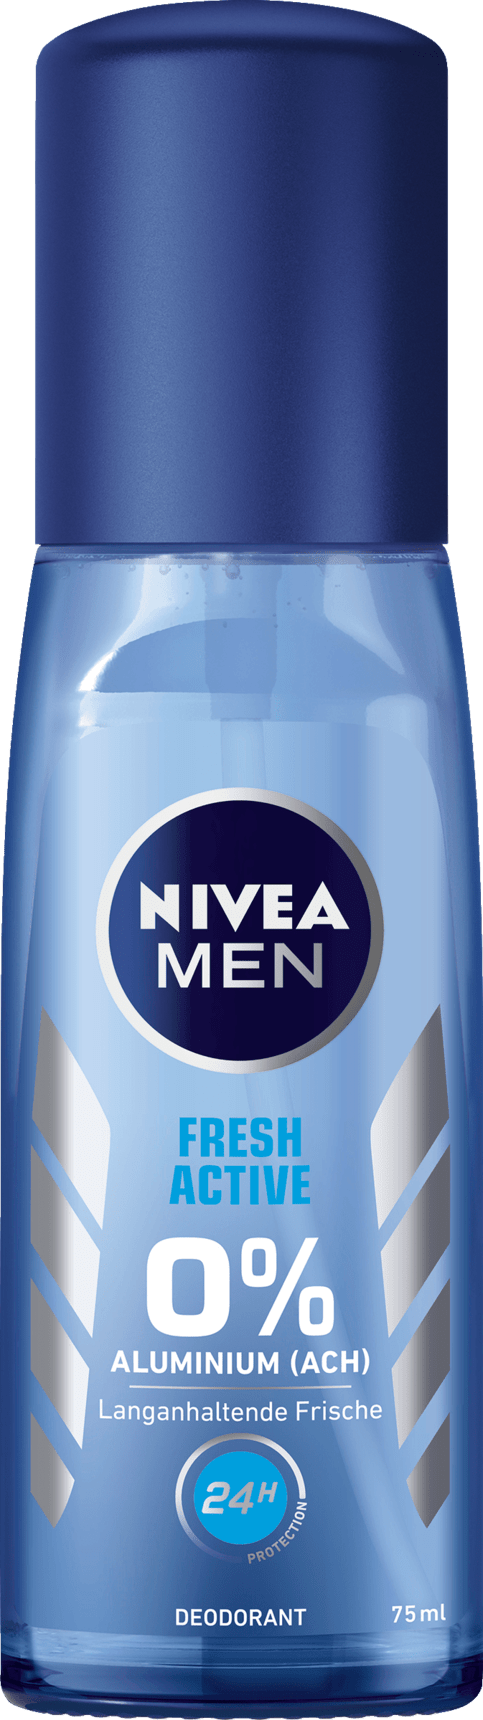 NIVEA MEN Deodorant Atomizer Deodorant Fresh Active, 75 Ml